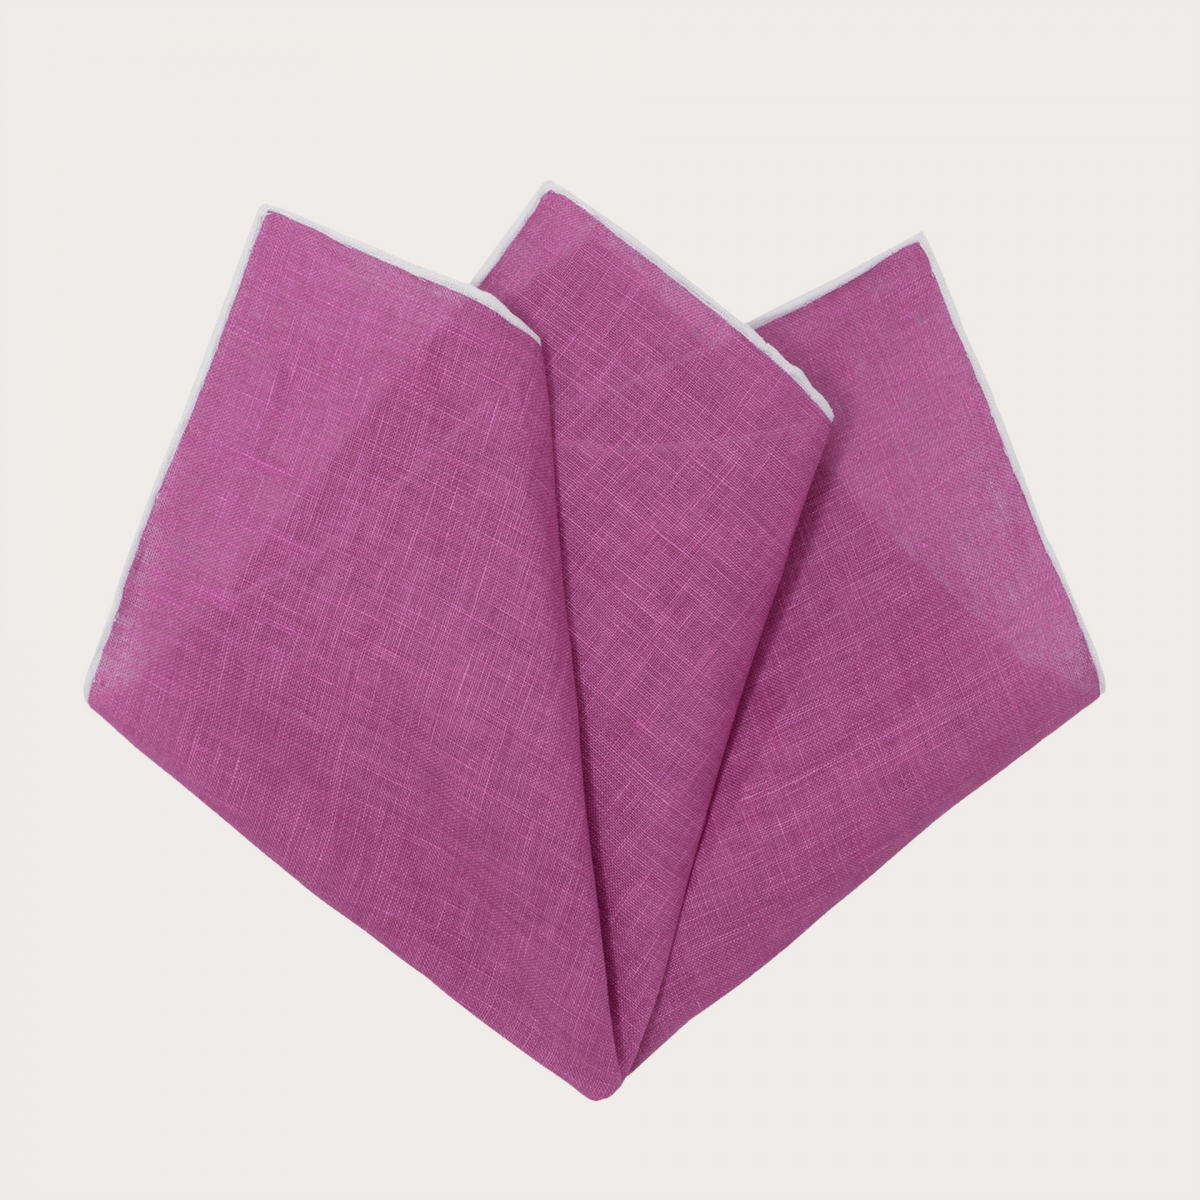 BRUCLE Pañuelo de bolsillo en lino, violeta con bordes blancos